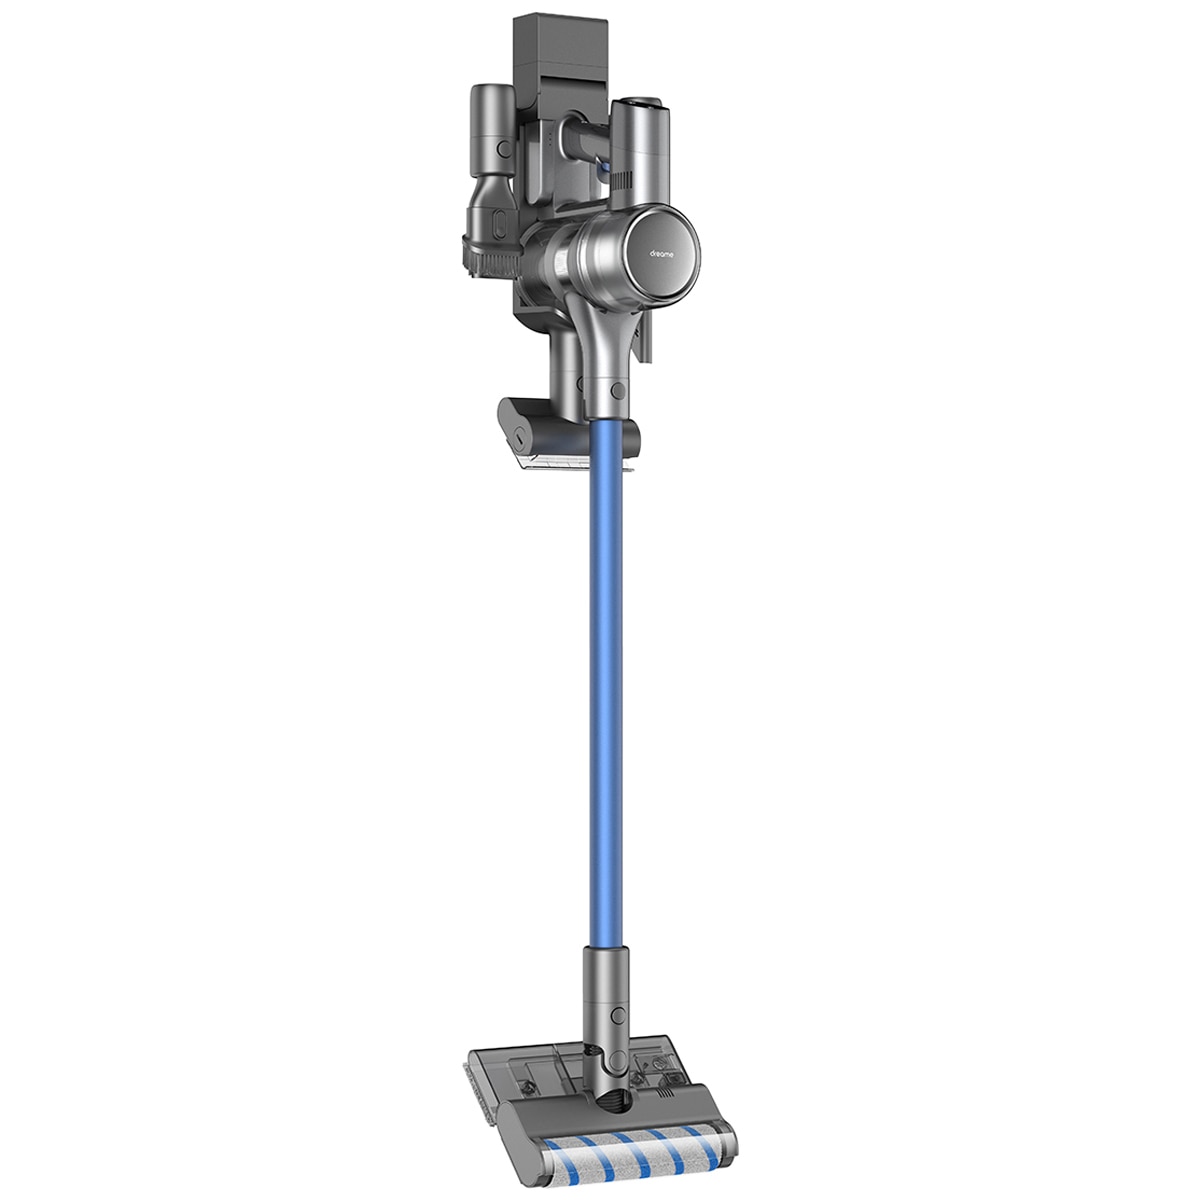 Dreame T20 Pro Stick Vacuum Cleaner